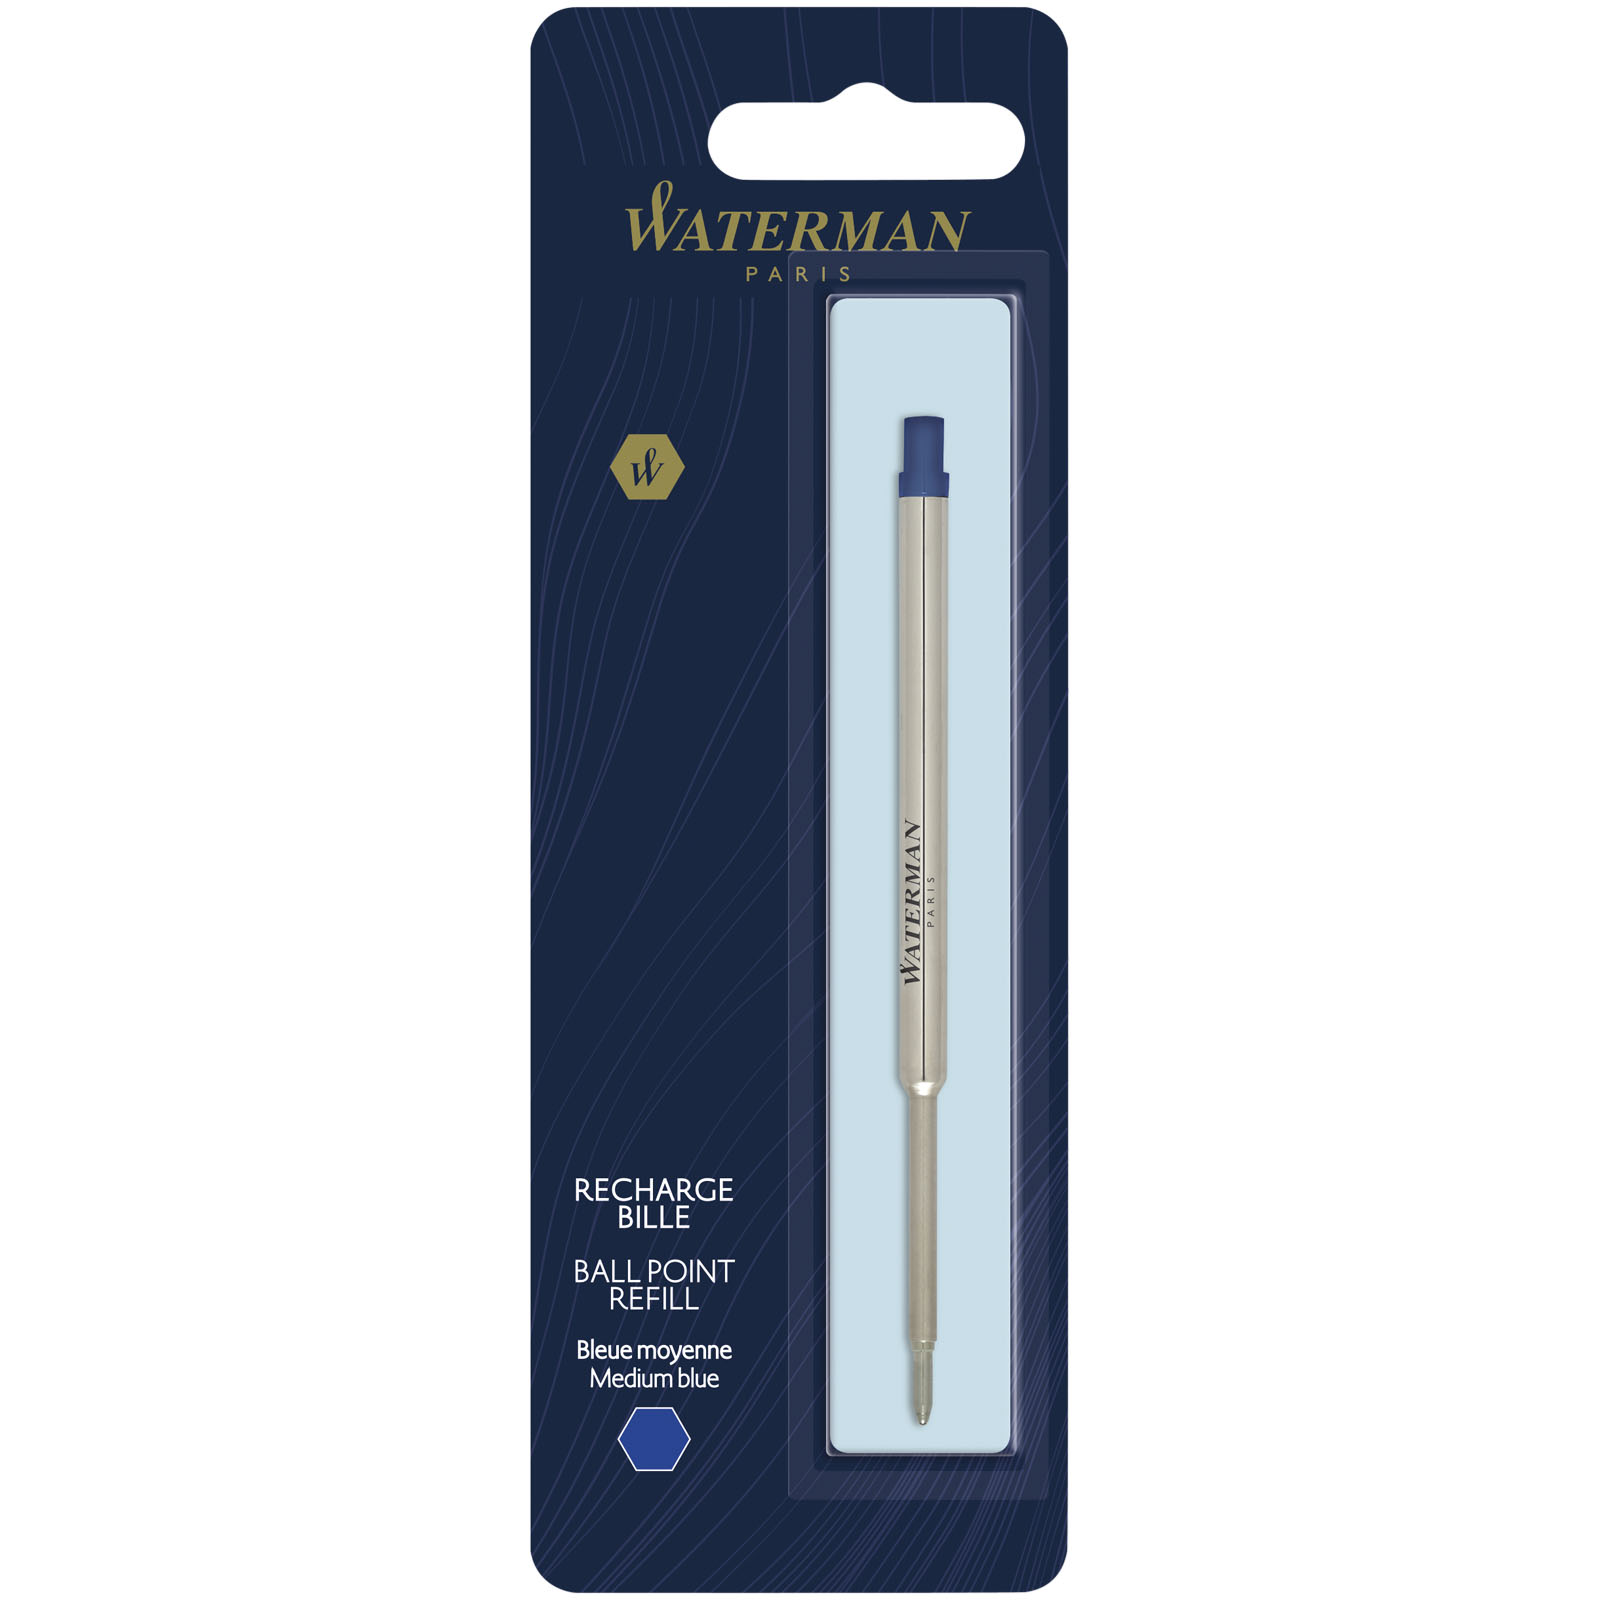 Pens & Writing - Waterman ballpoint pen refill